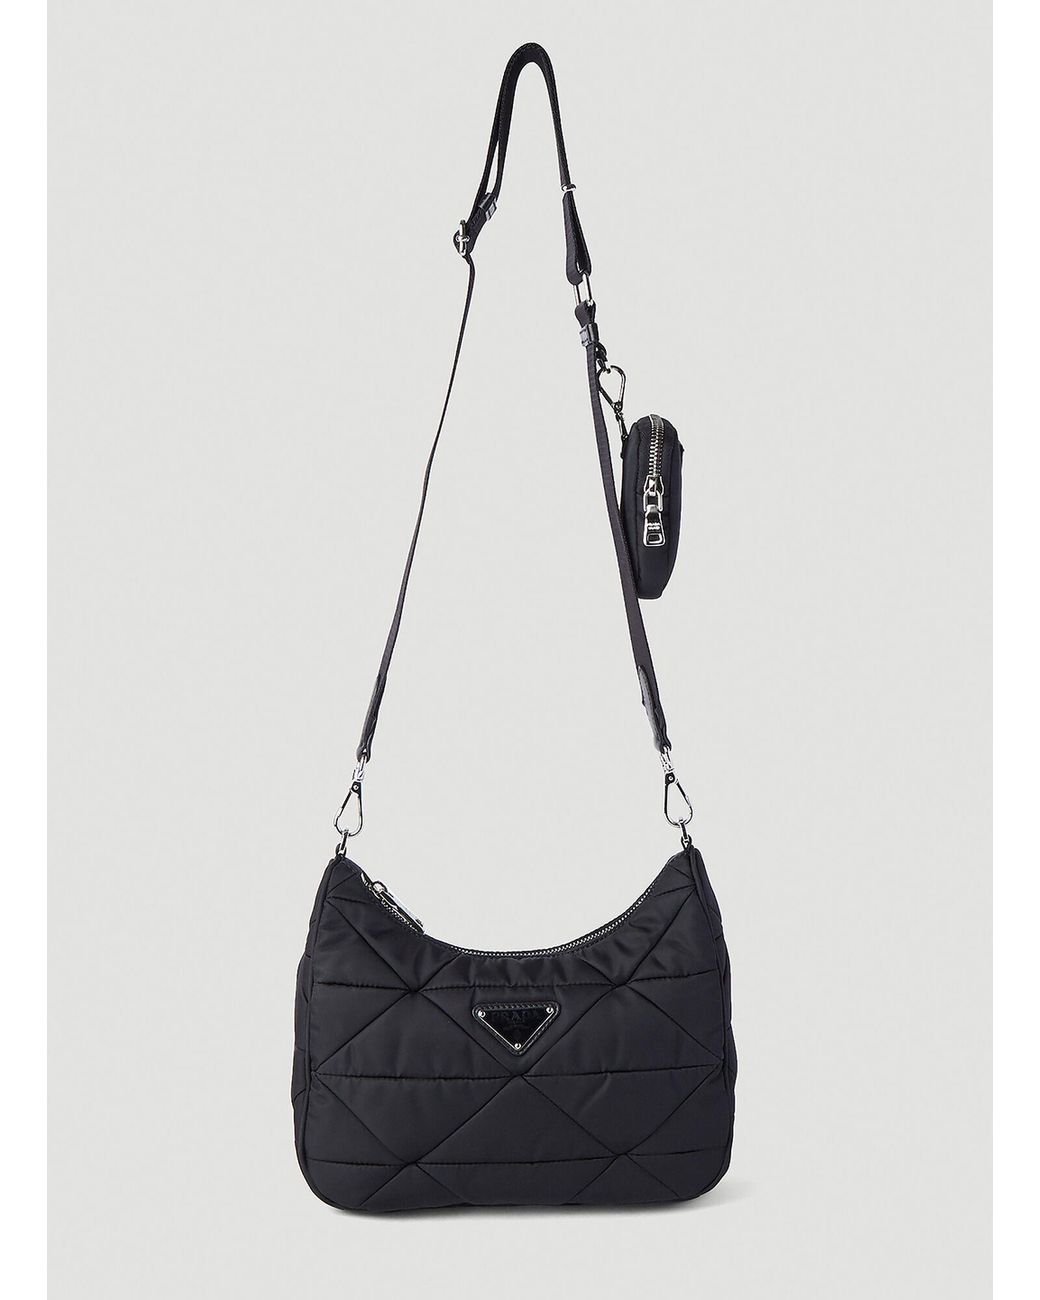 Prada Re-edition Quilted Shoulder Bag in Black | Lyst